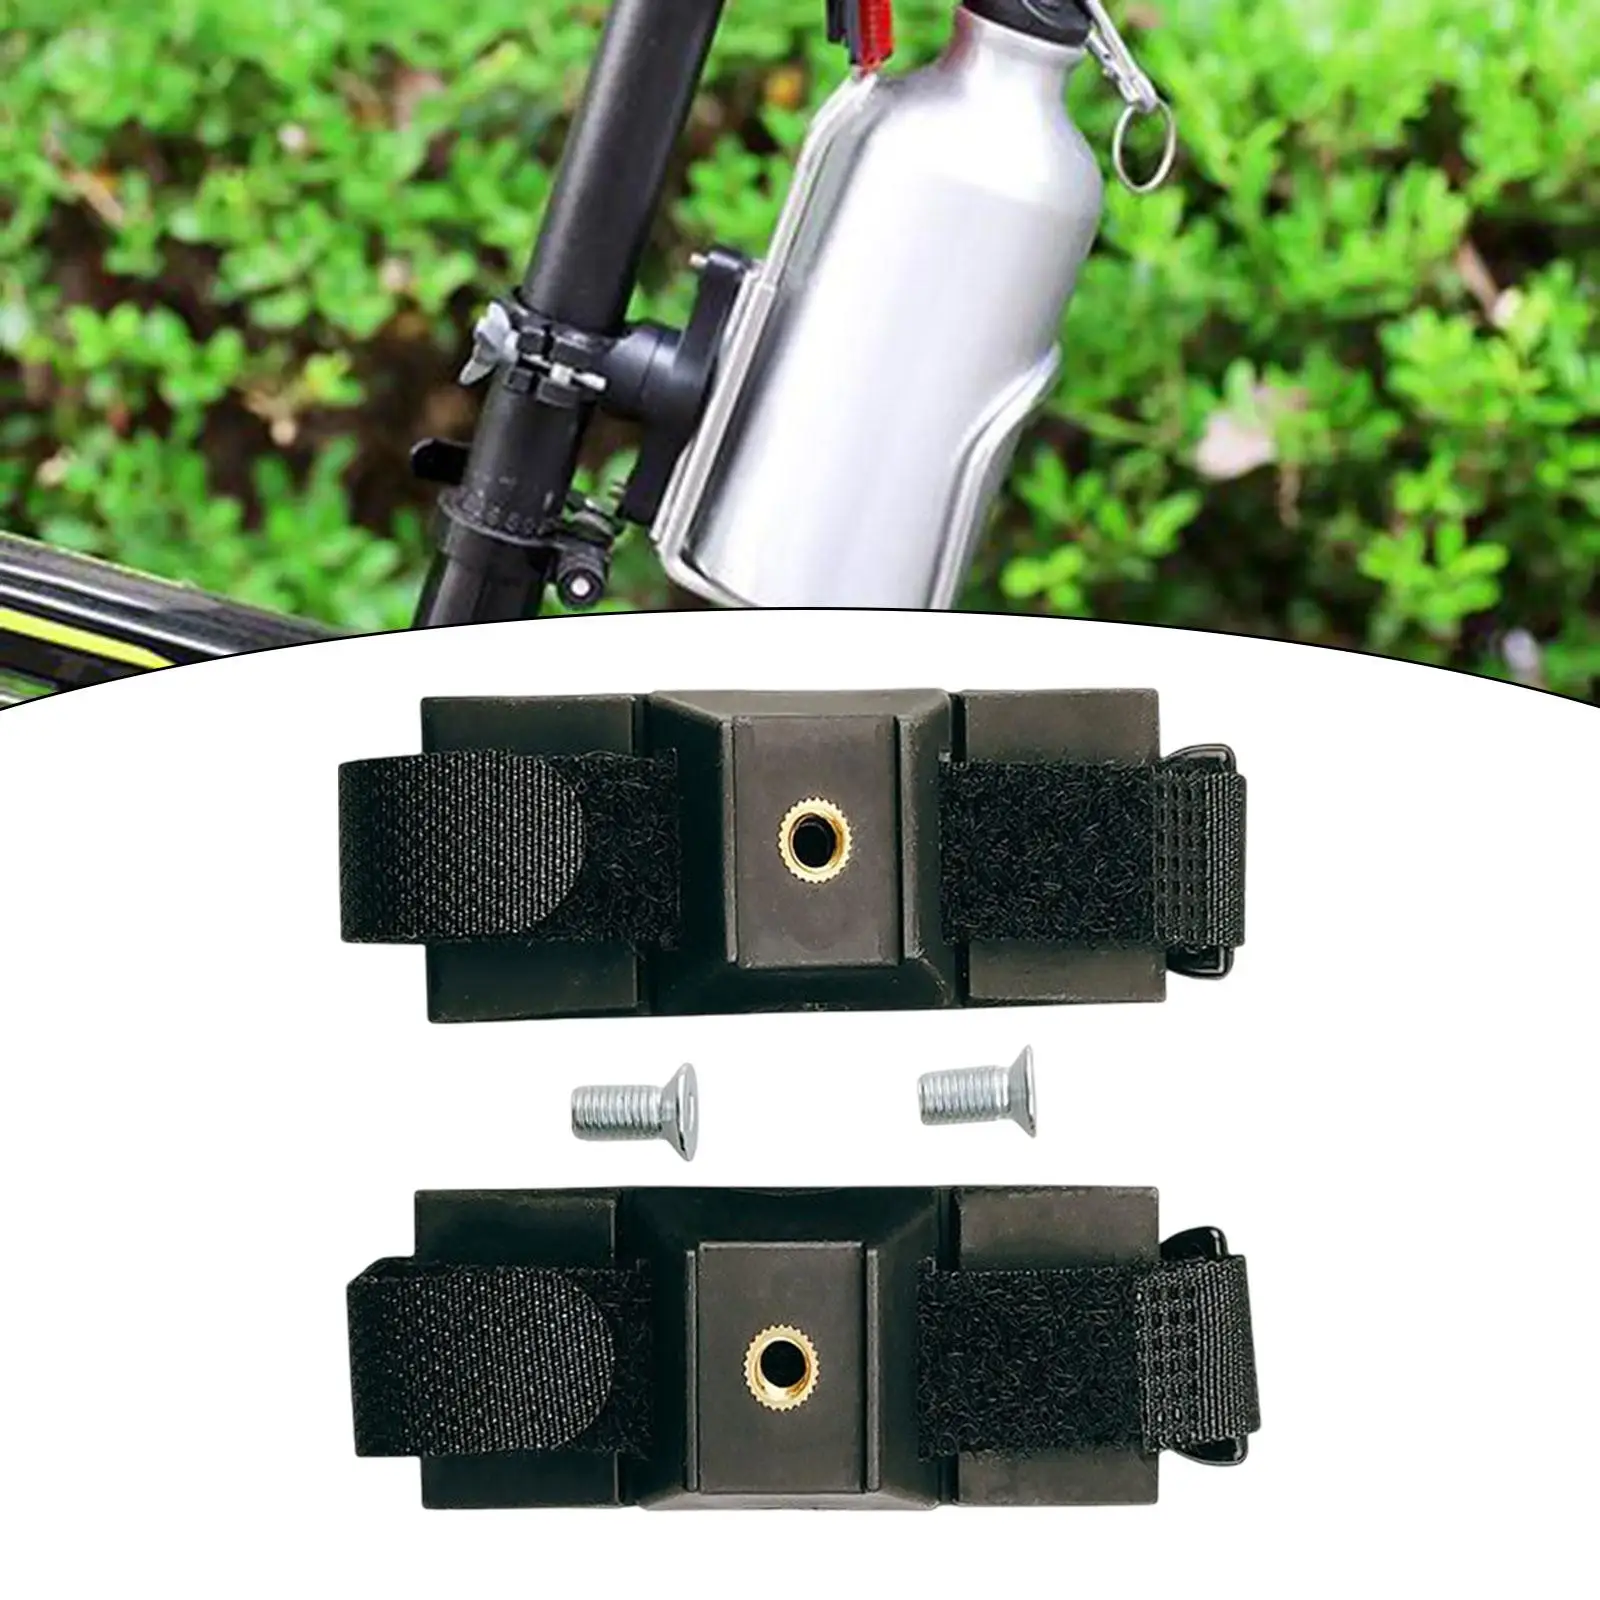 Universal Bike Water Bottle Cage Holder Adapter Holder Black Cup Frame Clamp